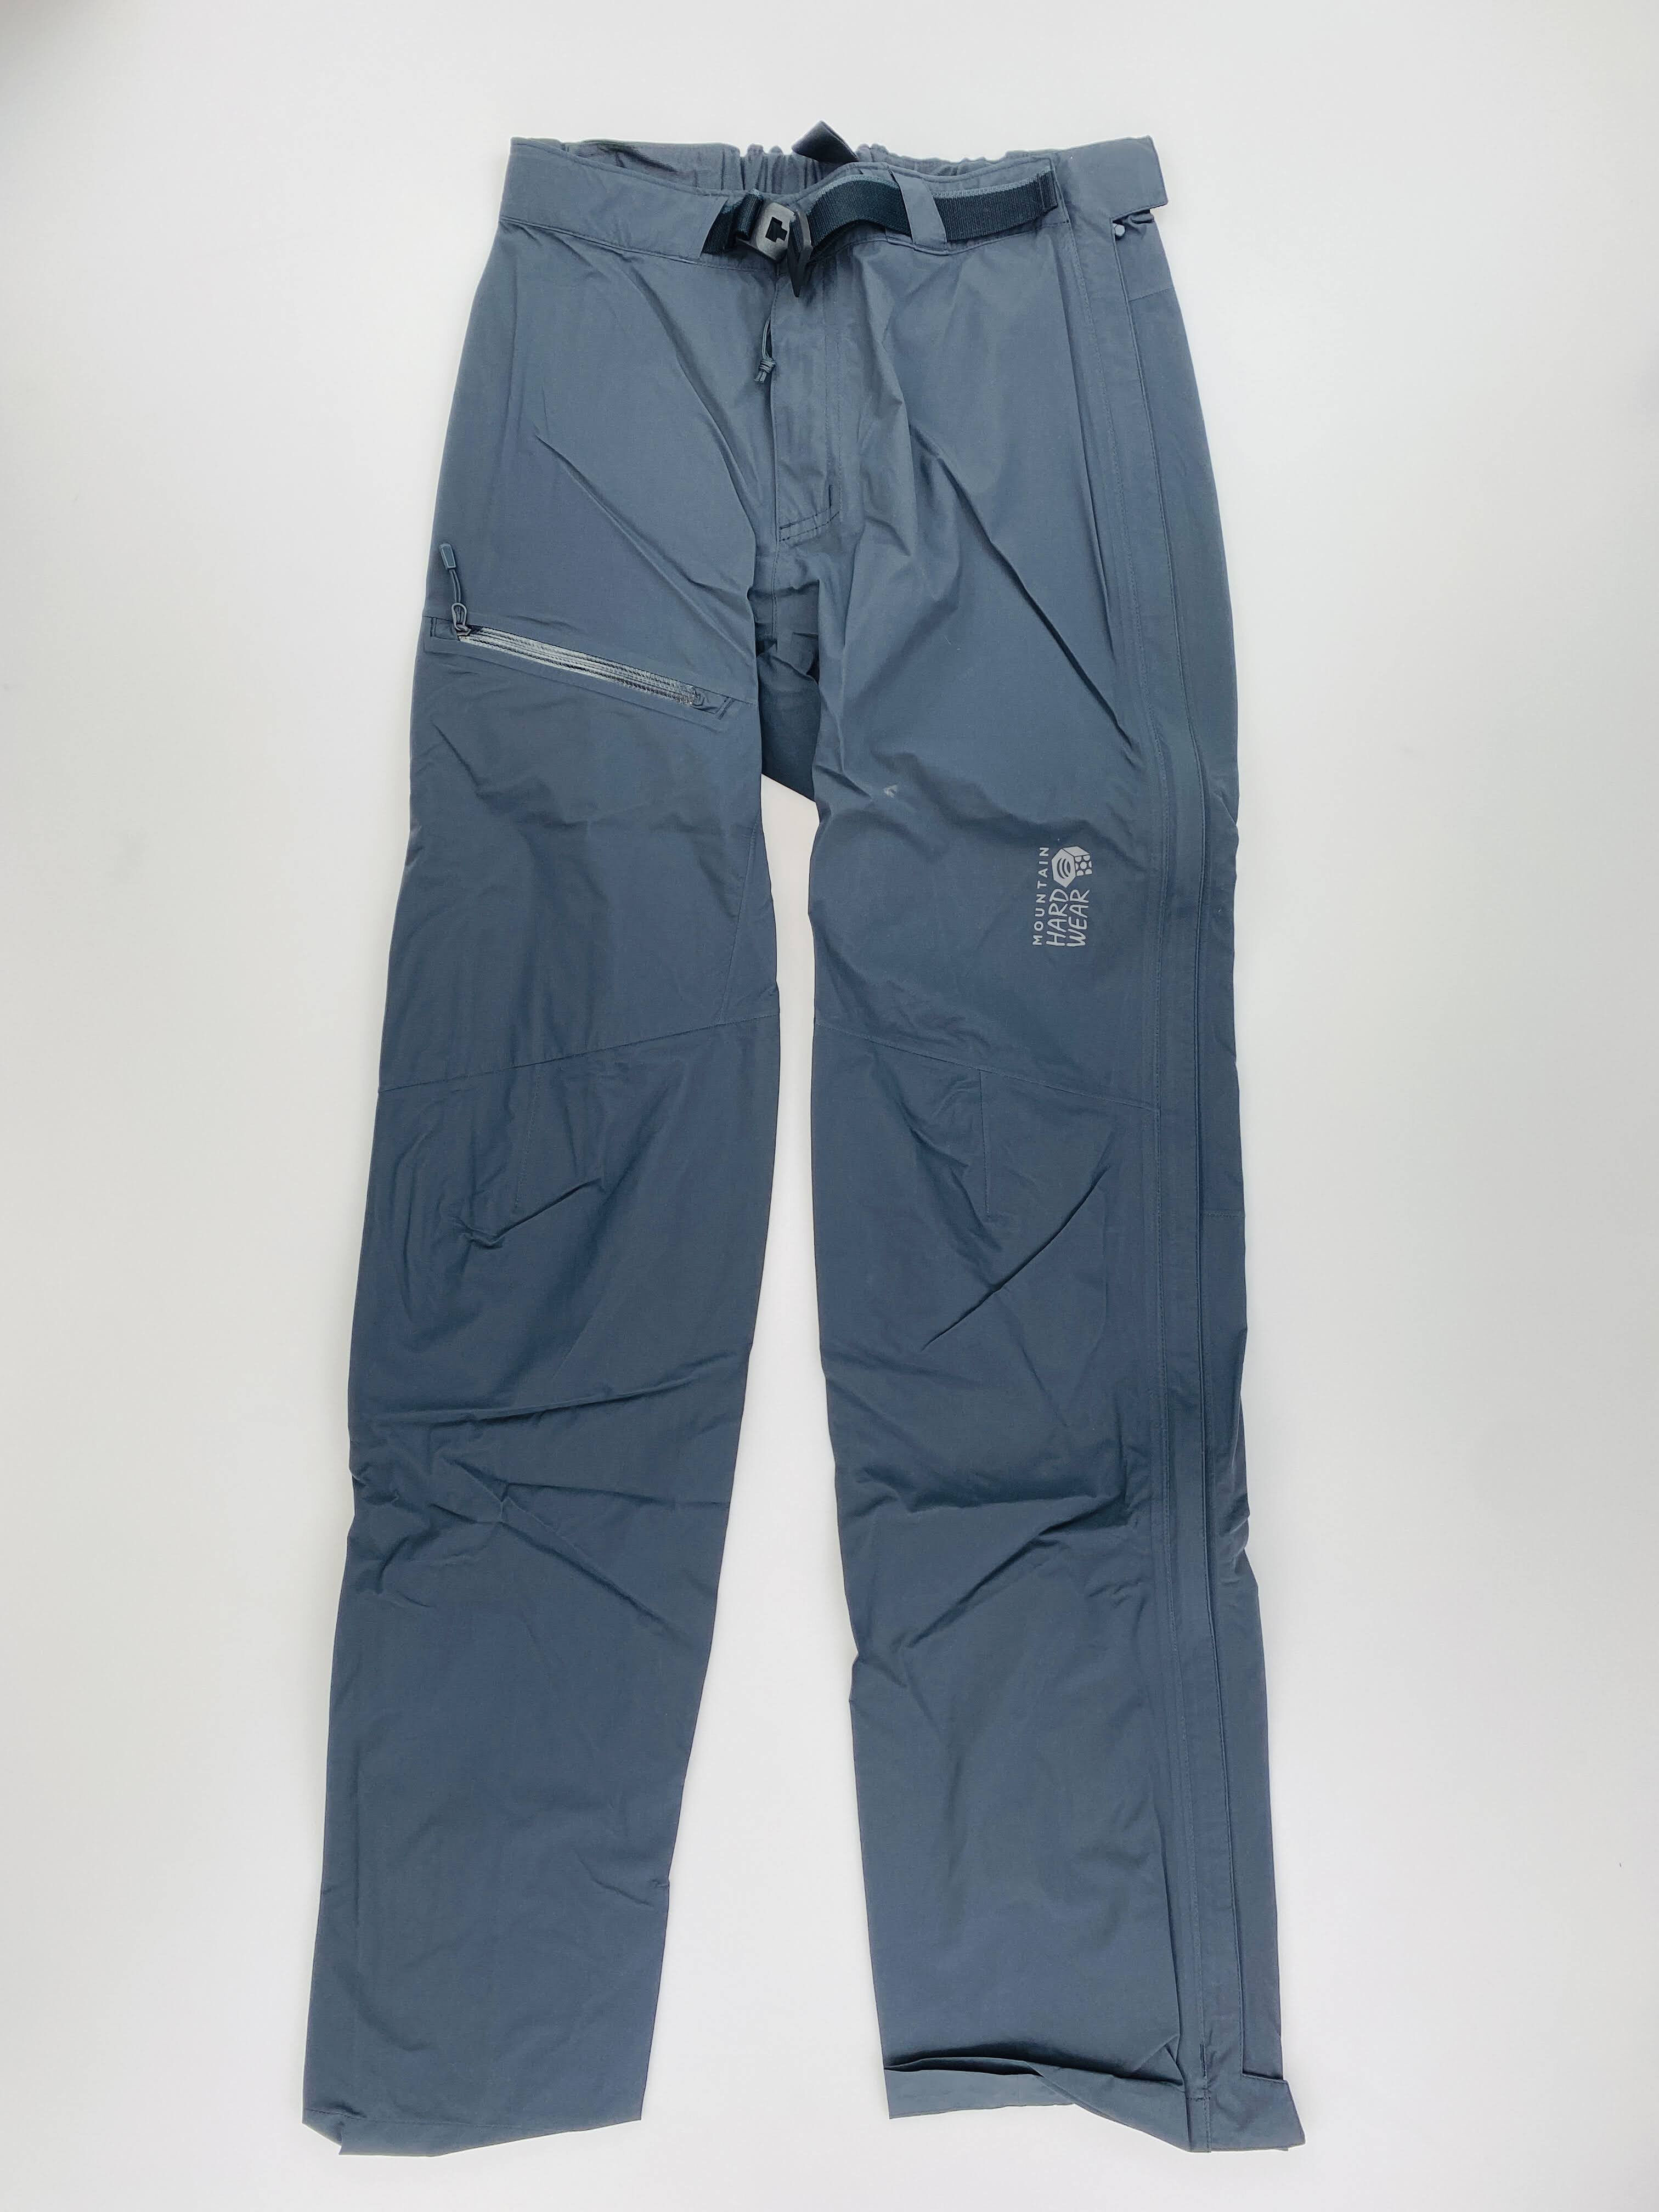 Mountain Hardwear Stretch Ozonic Man Pant Long - Seconde main Pantalon imperméable homme - Noir - S | Hardloop